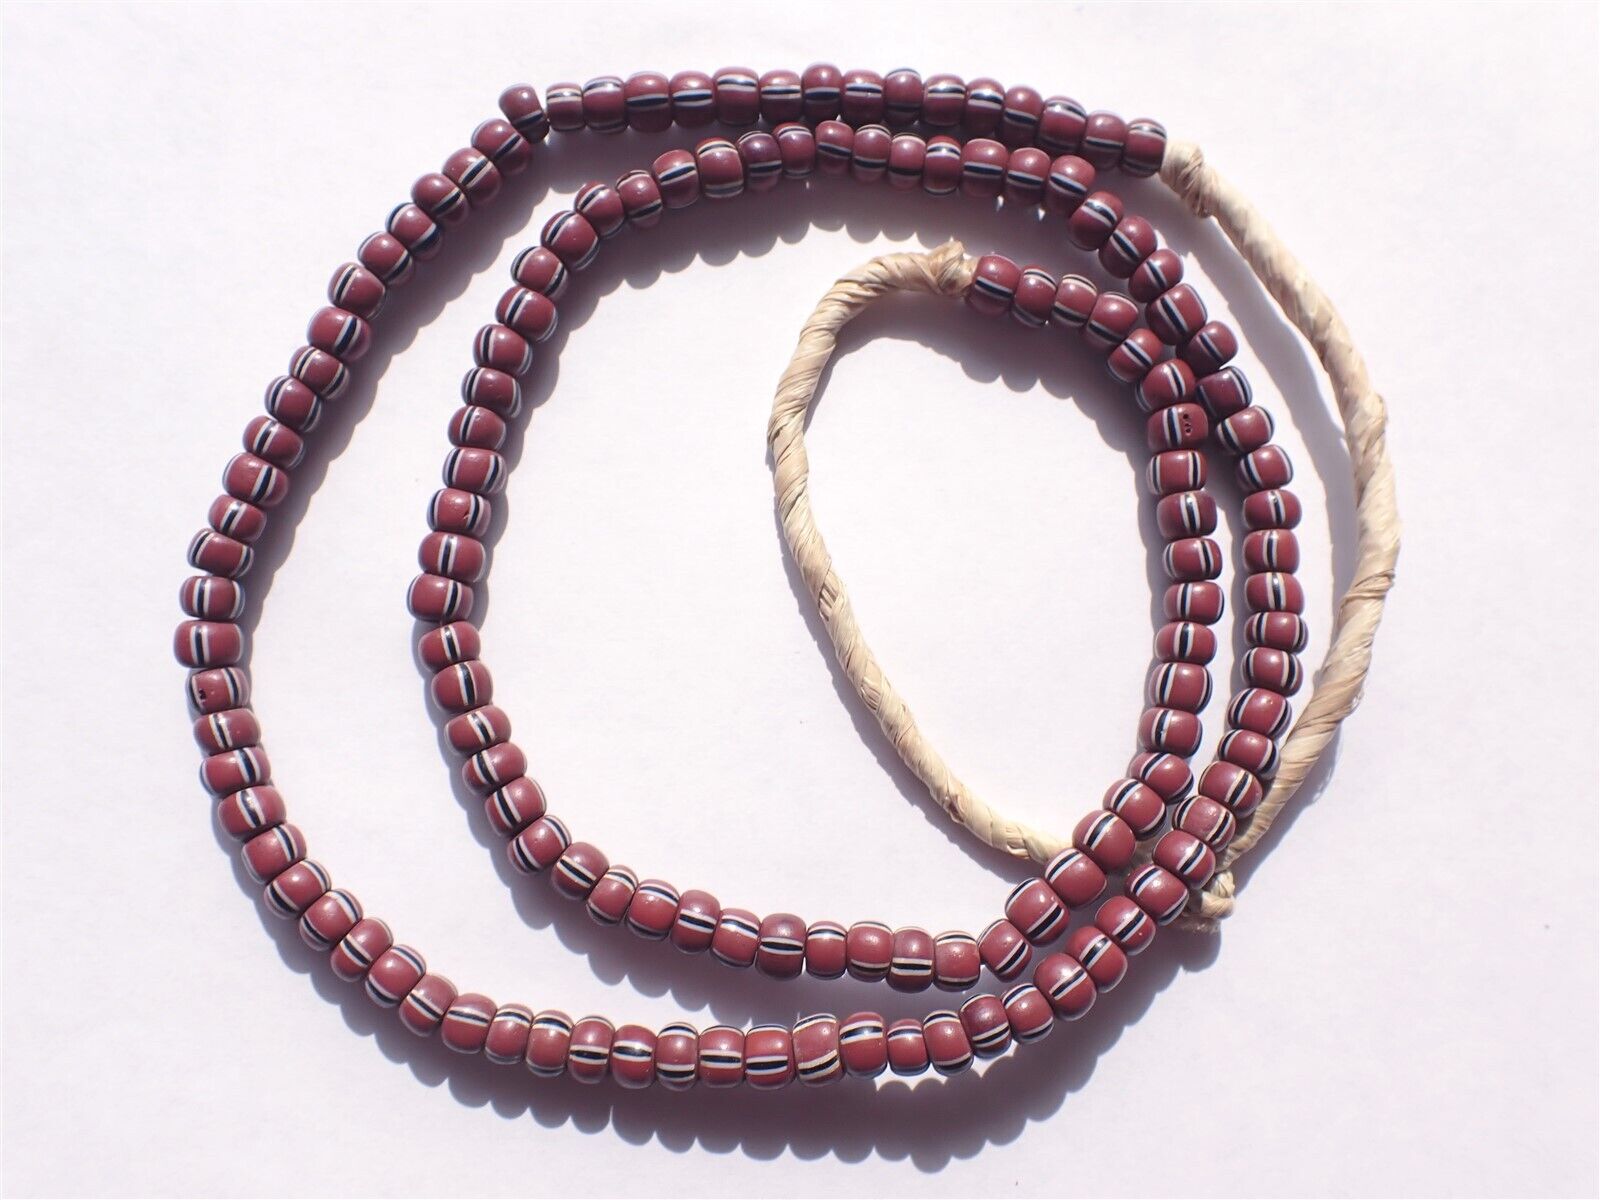 Antique Striped Pony Trade Beads, Brown w Bk/White- 5-5.5mm - Strand